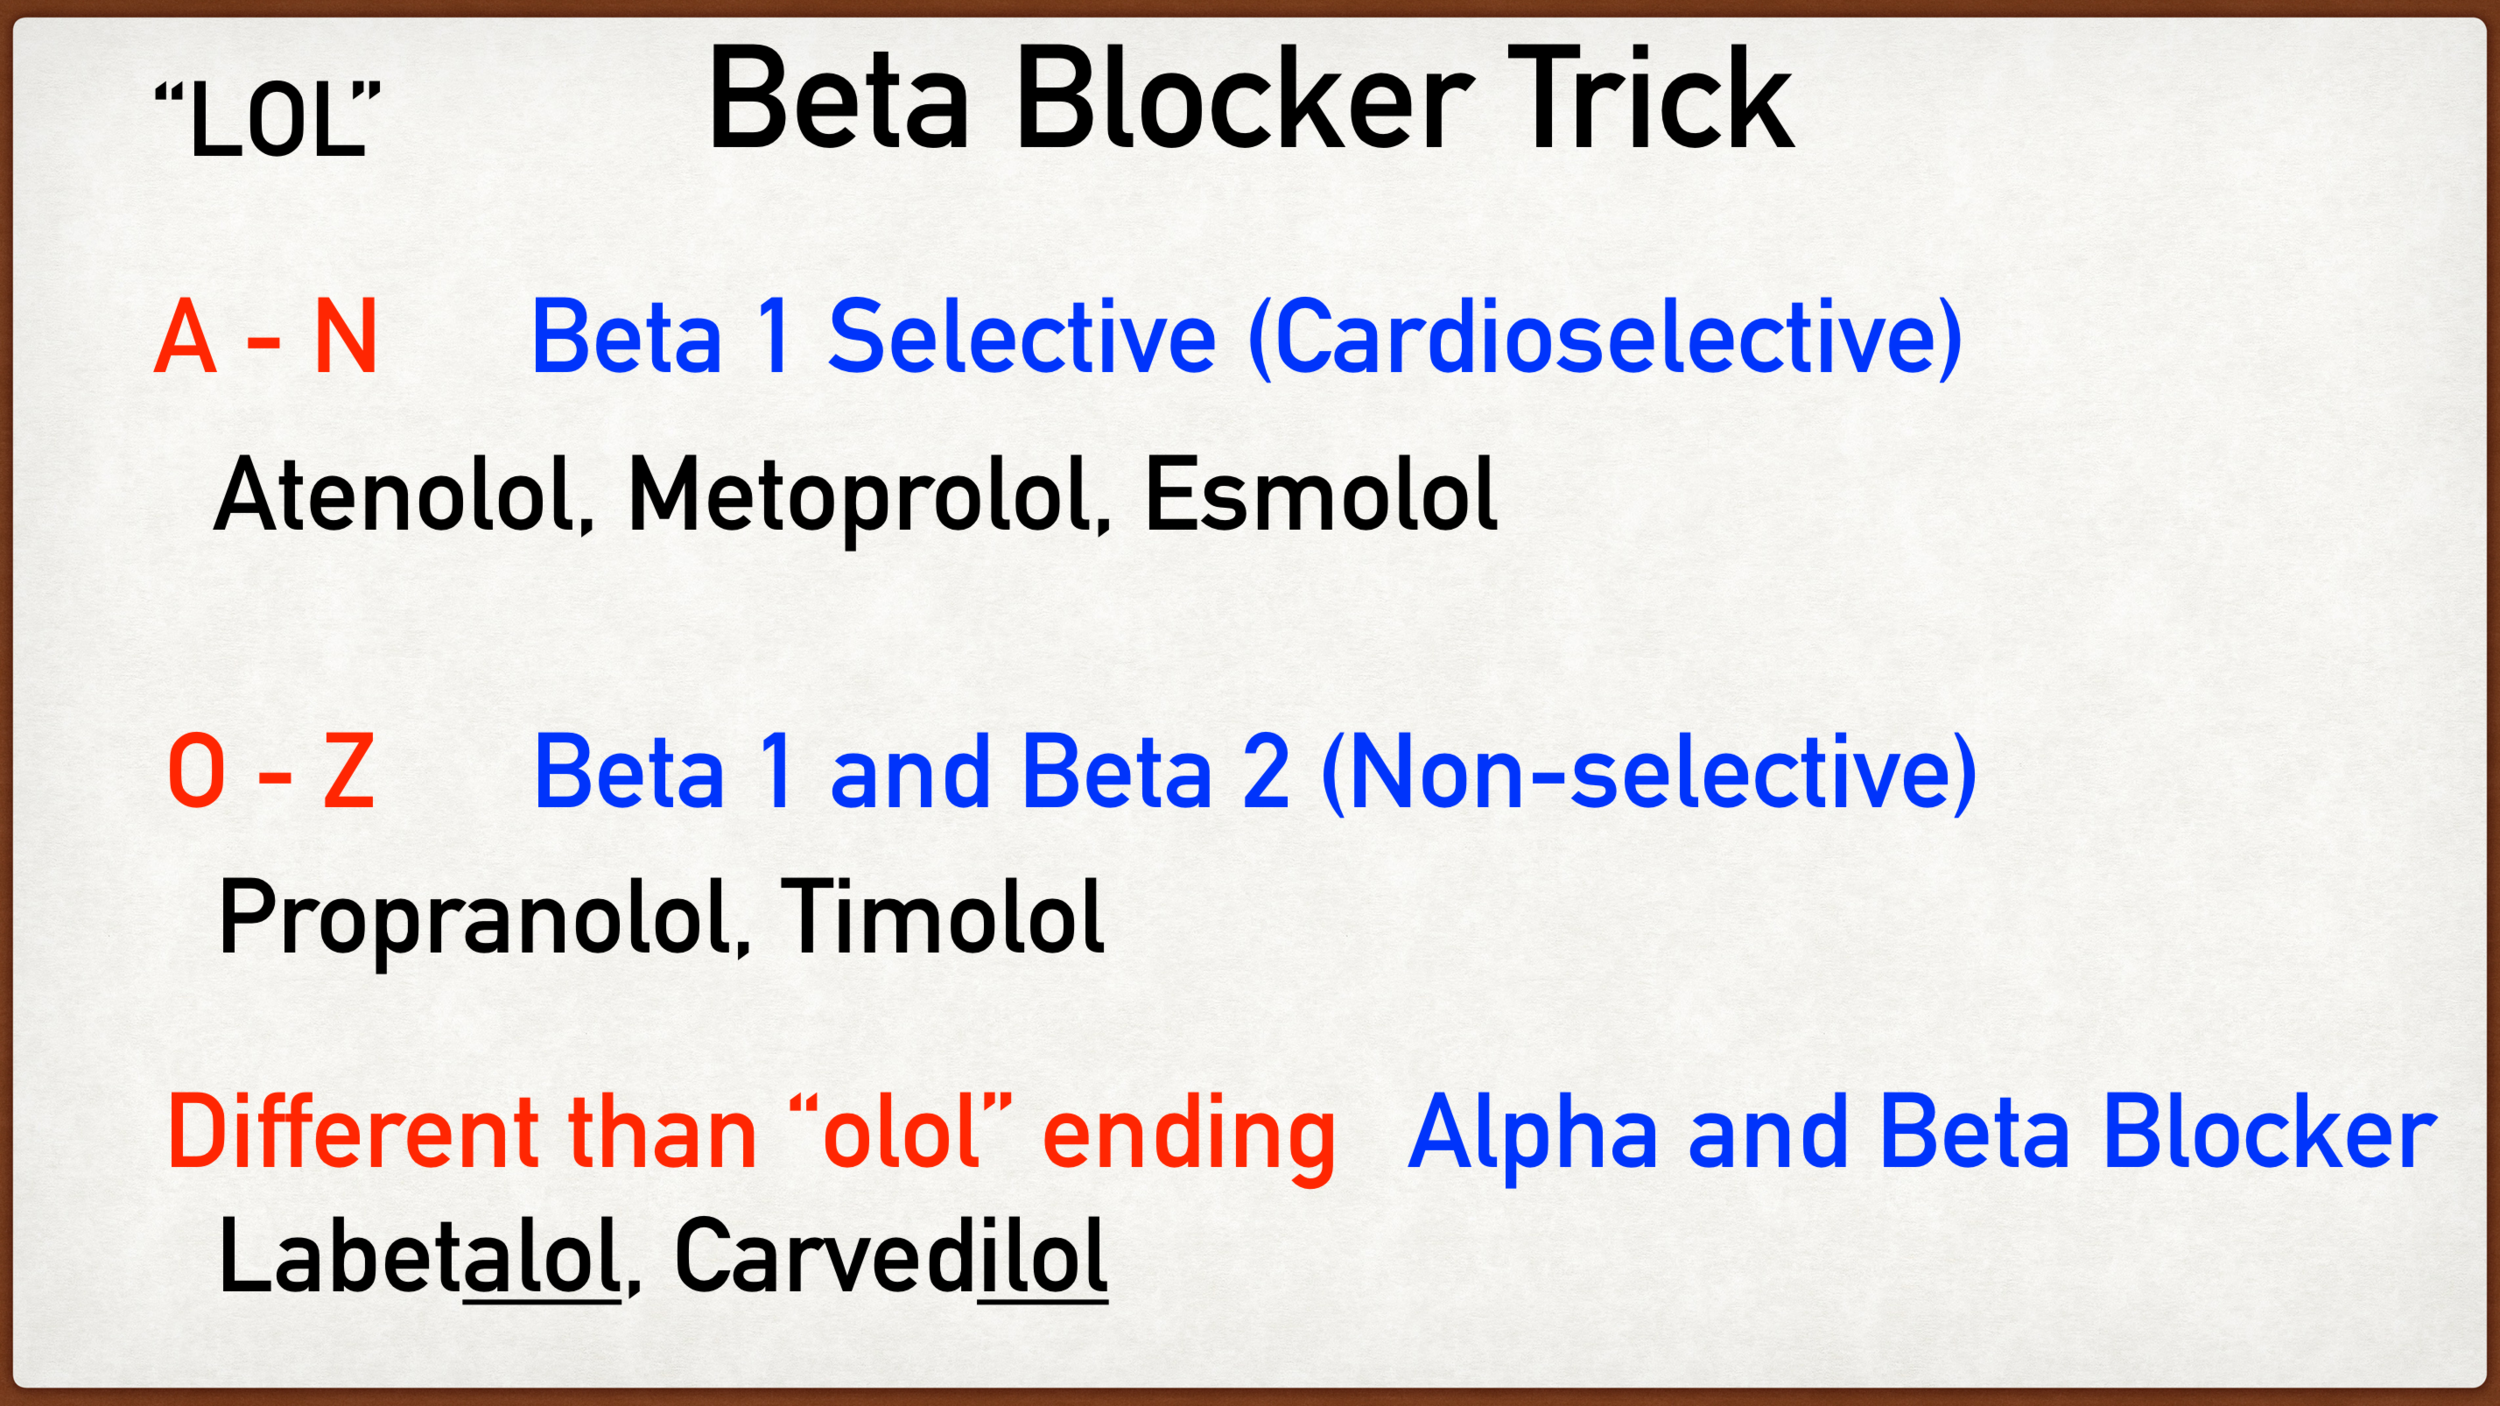 Labetalol - An alpha and beta blocker for hypertension 